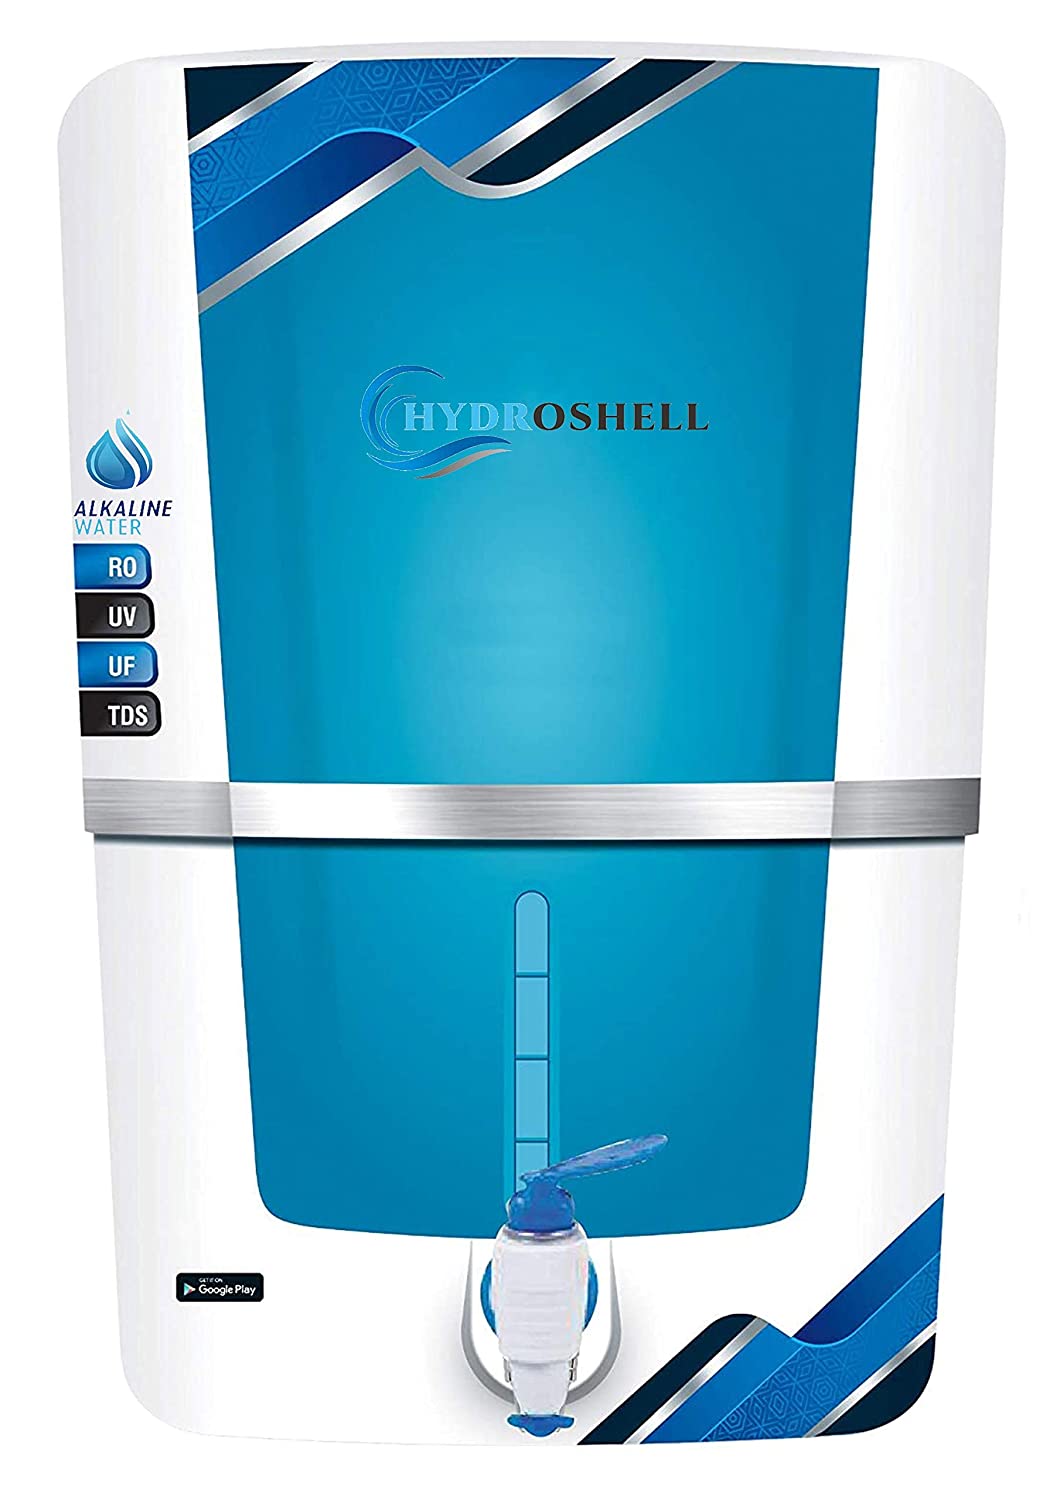 Hydroshell Advanced Alkaline 12 L RO + UV + UF + TDS Water Purifier